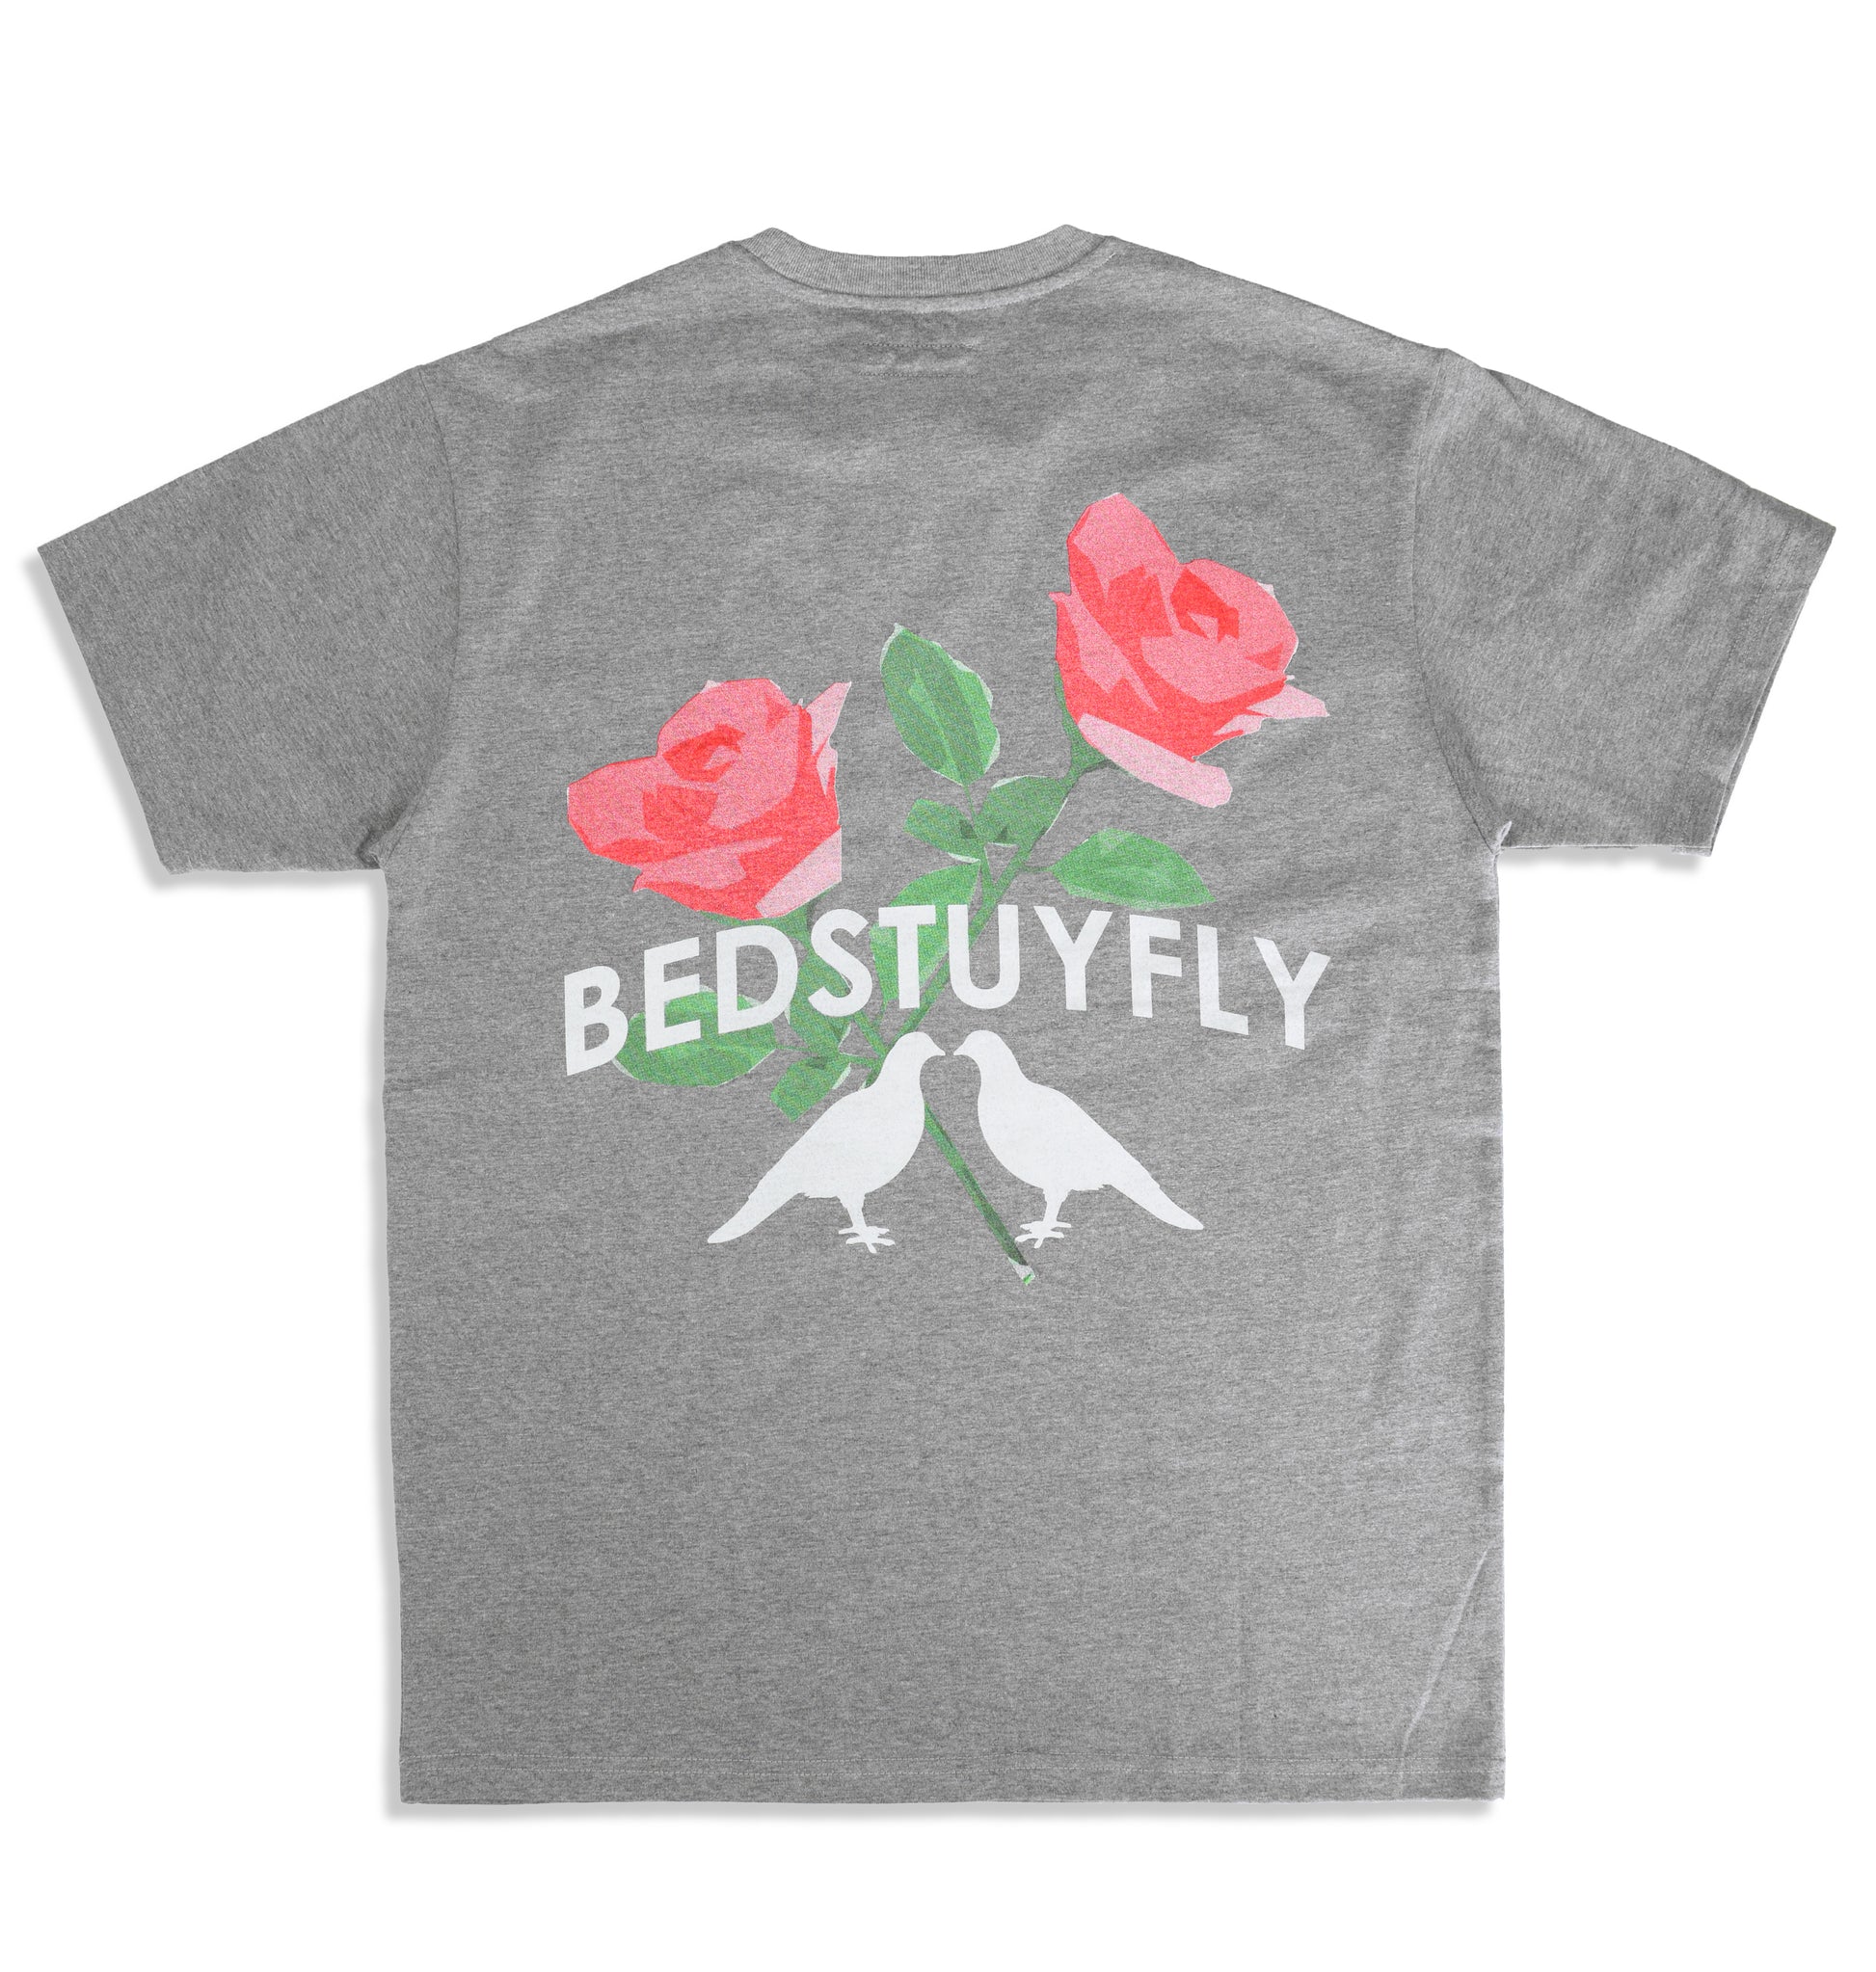 Give'm Roses T-Shirt - Bedstuyfly